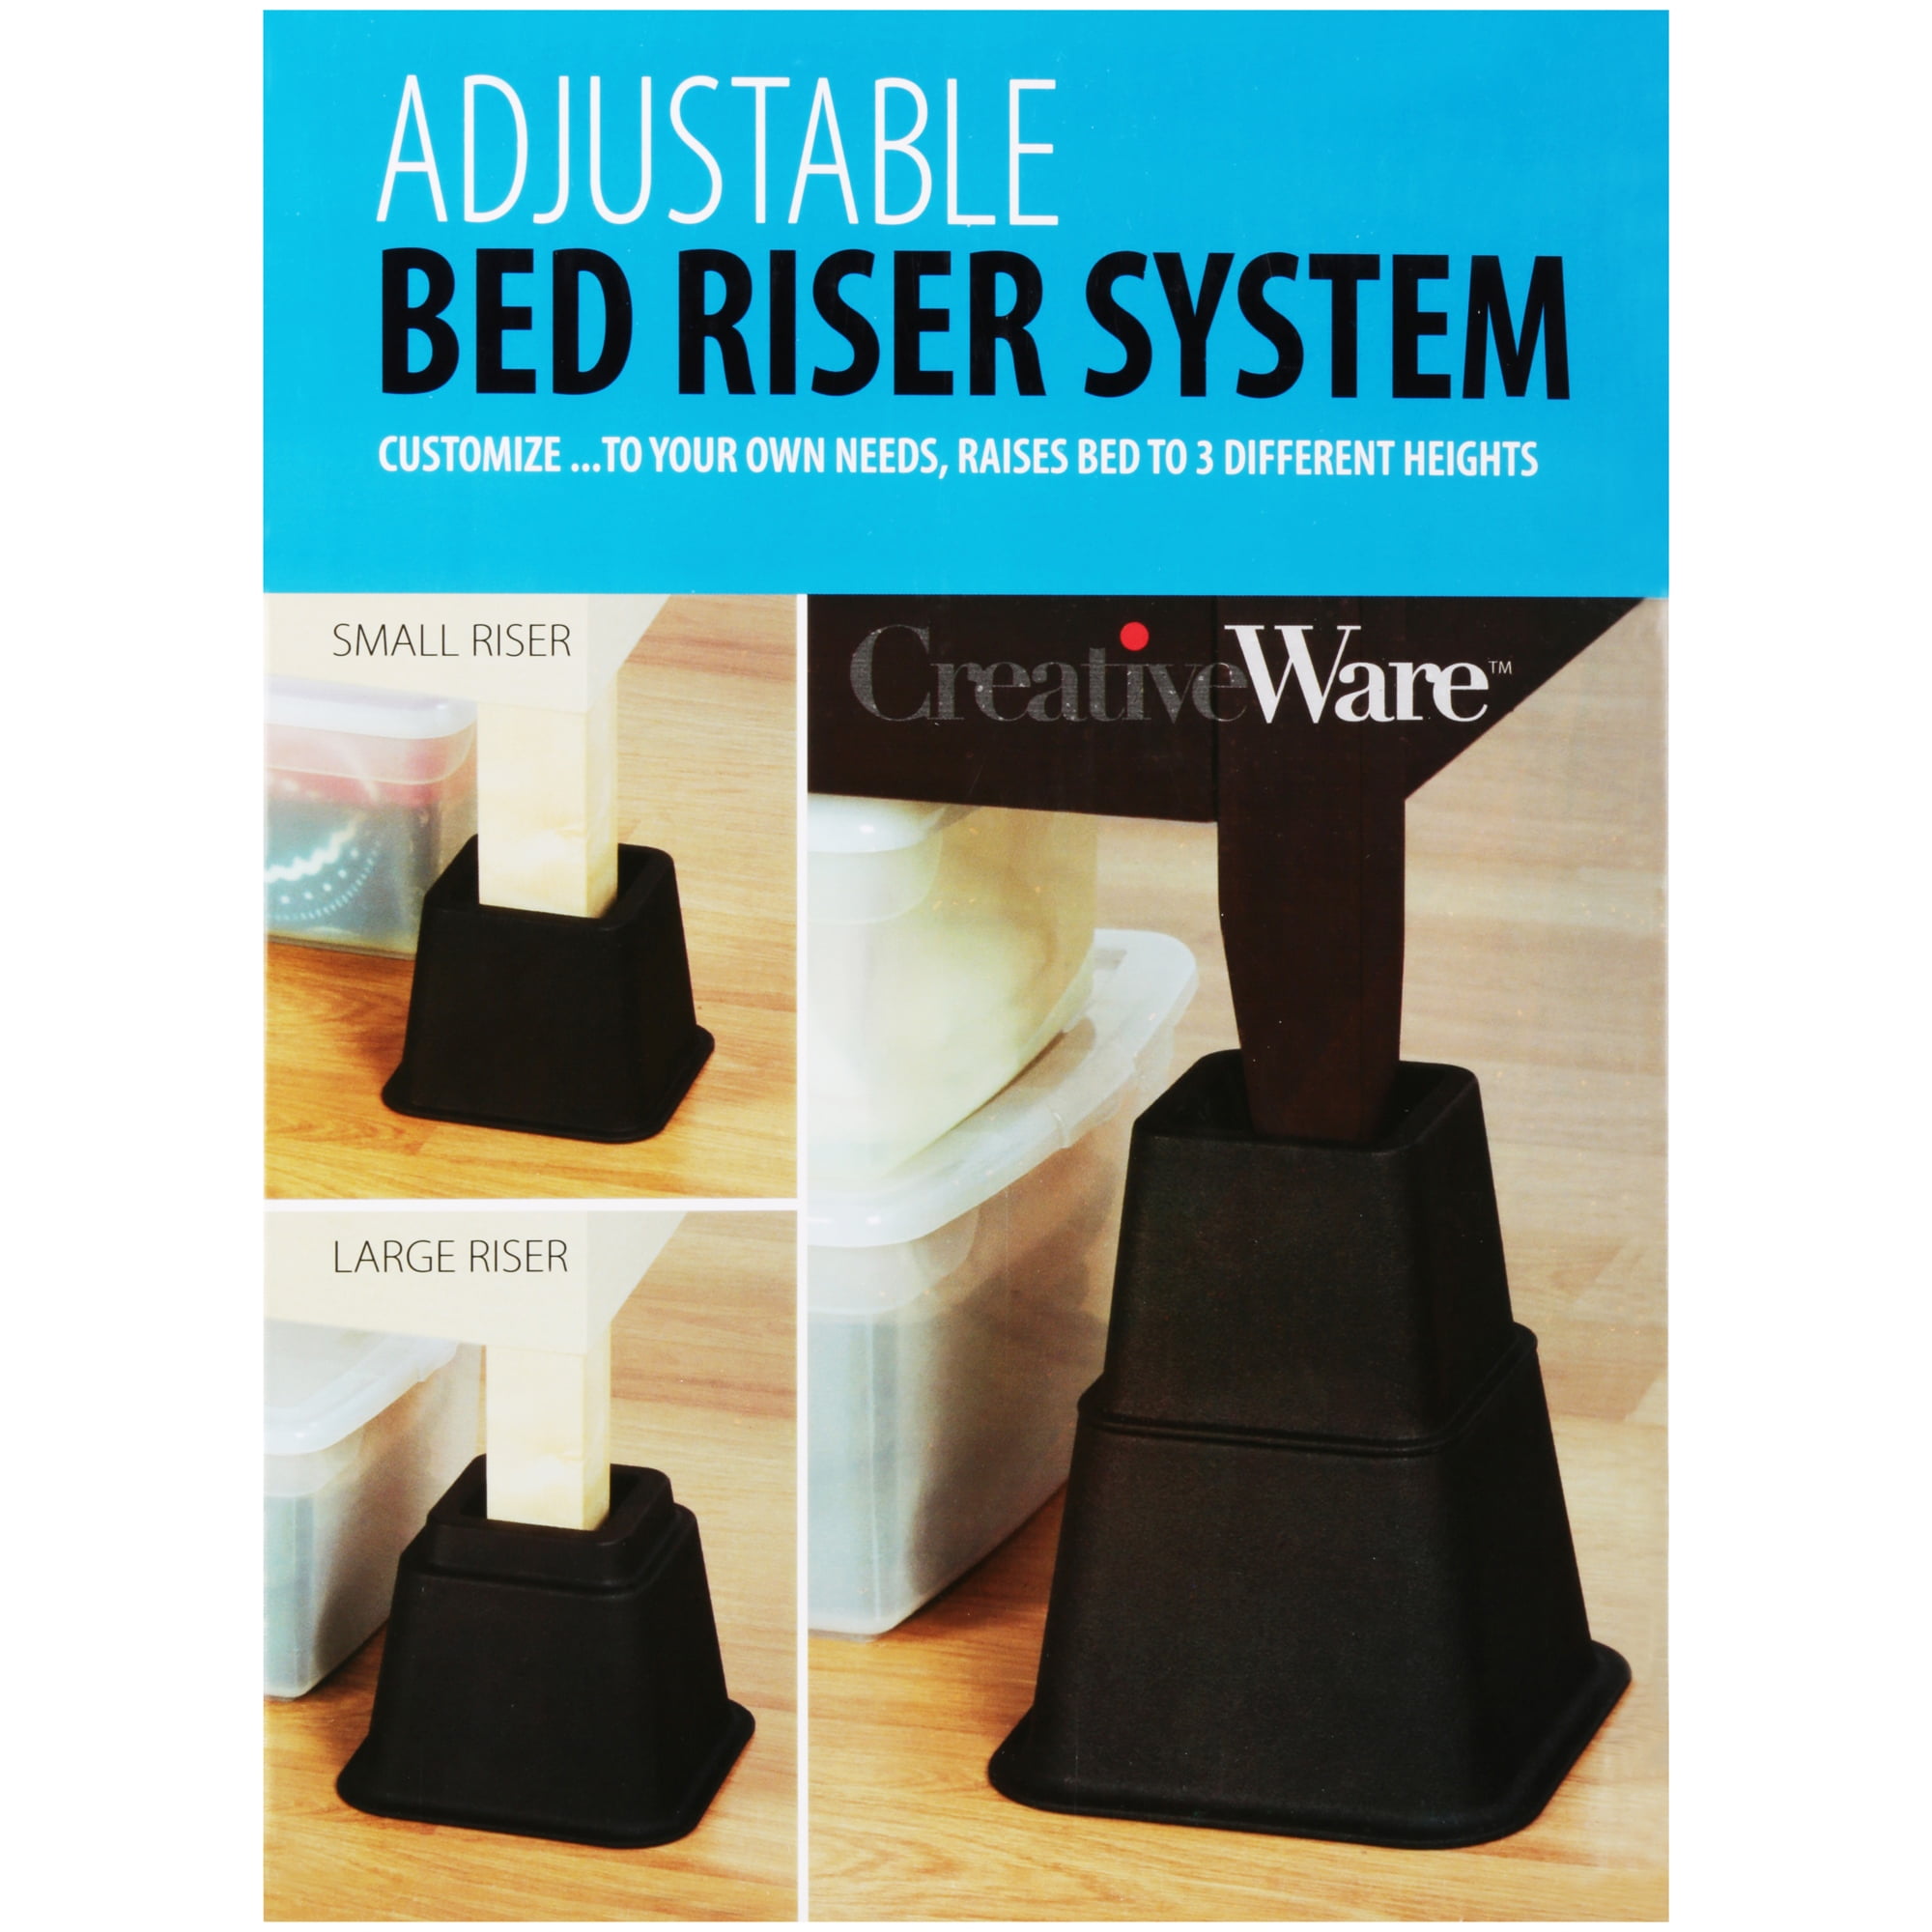 CreativeWare Adjustable Bed Riser System in Black   Walmart.